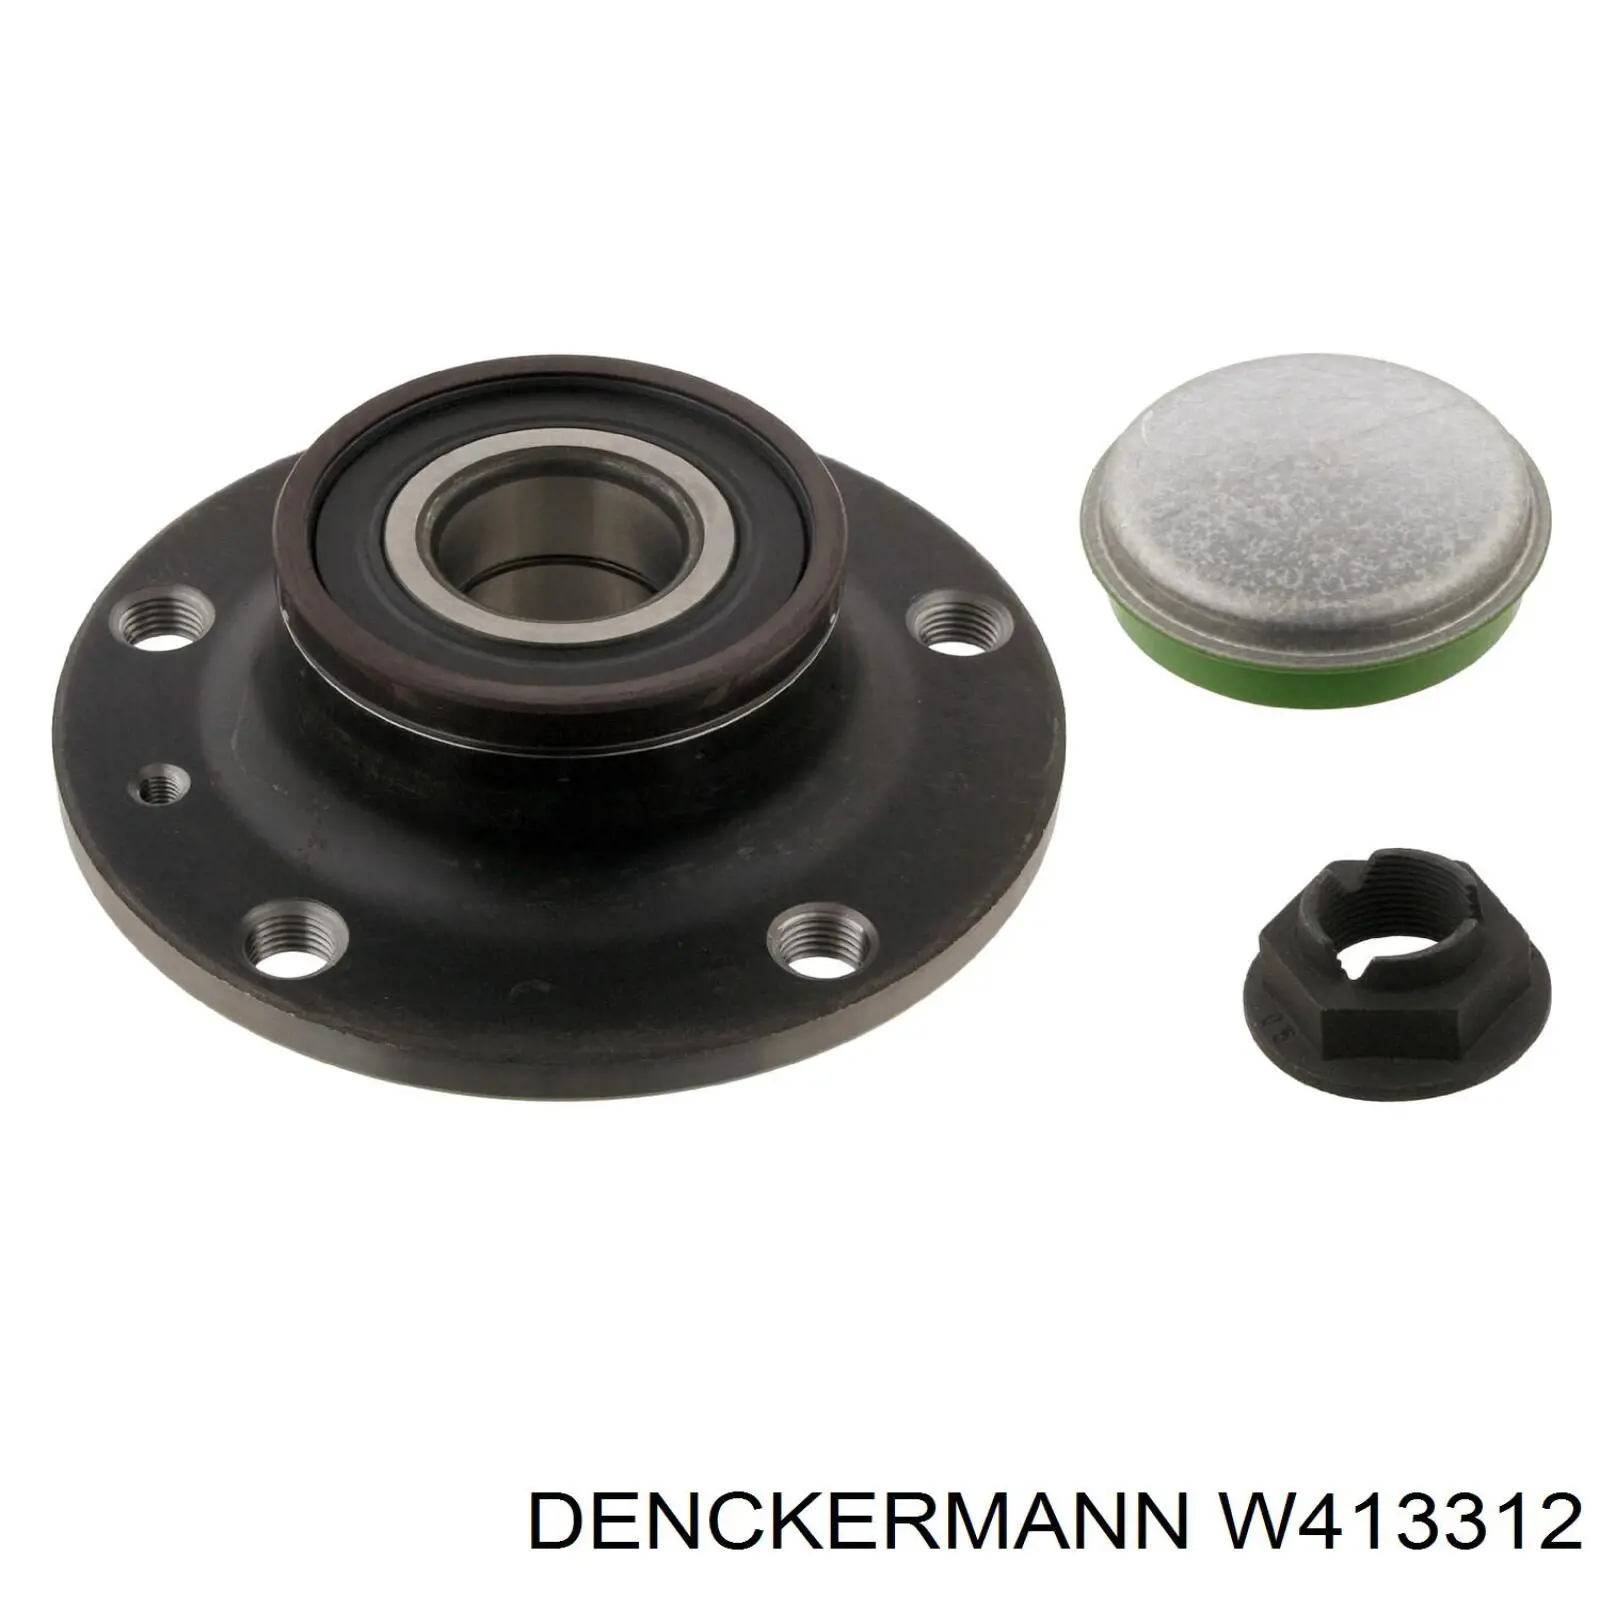 W413312 Denckermann ступица задняя